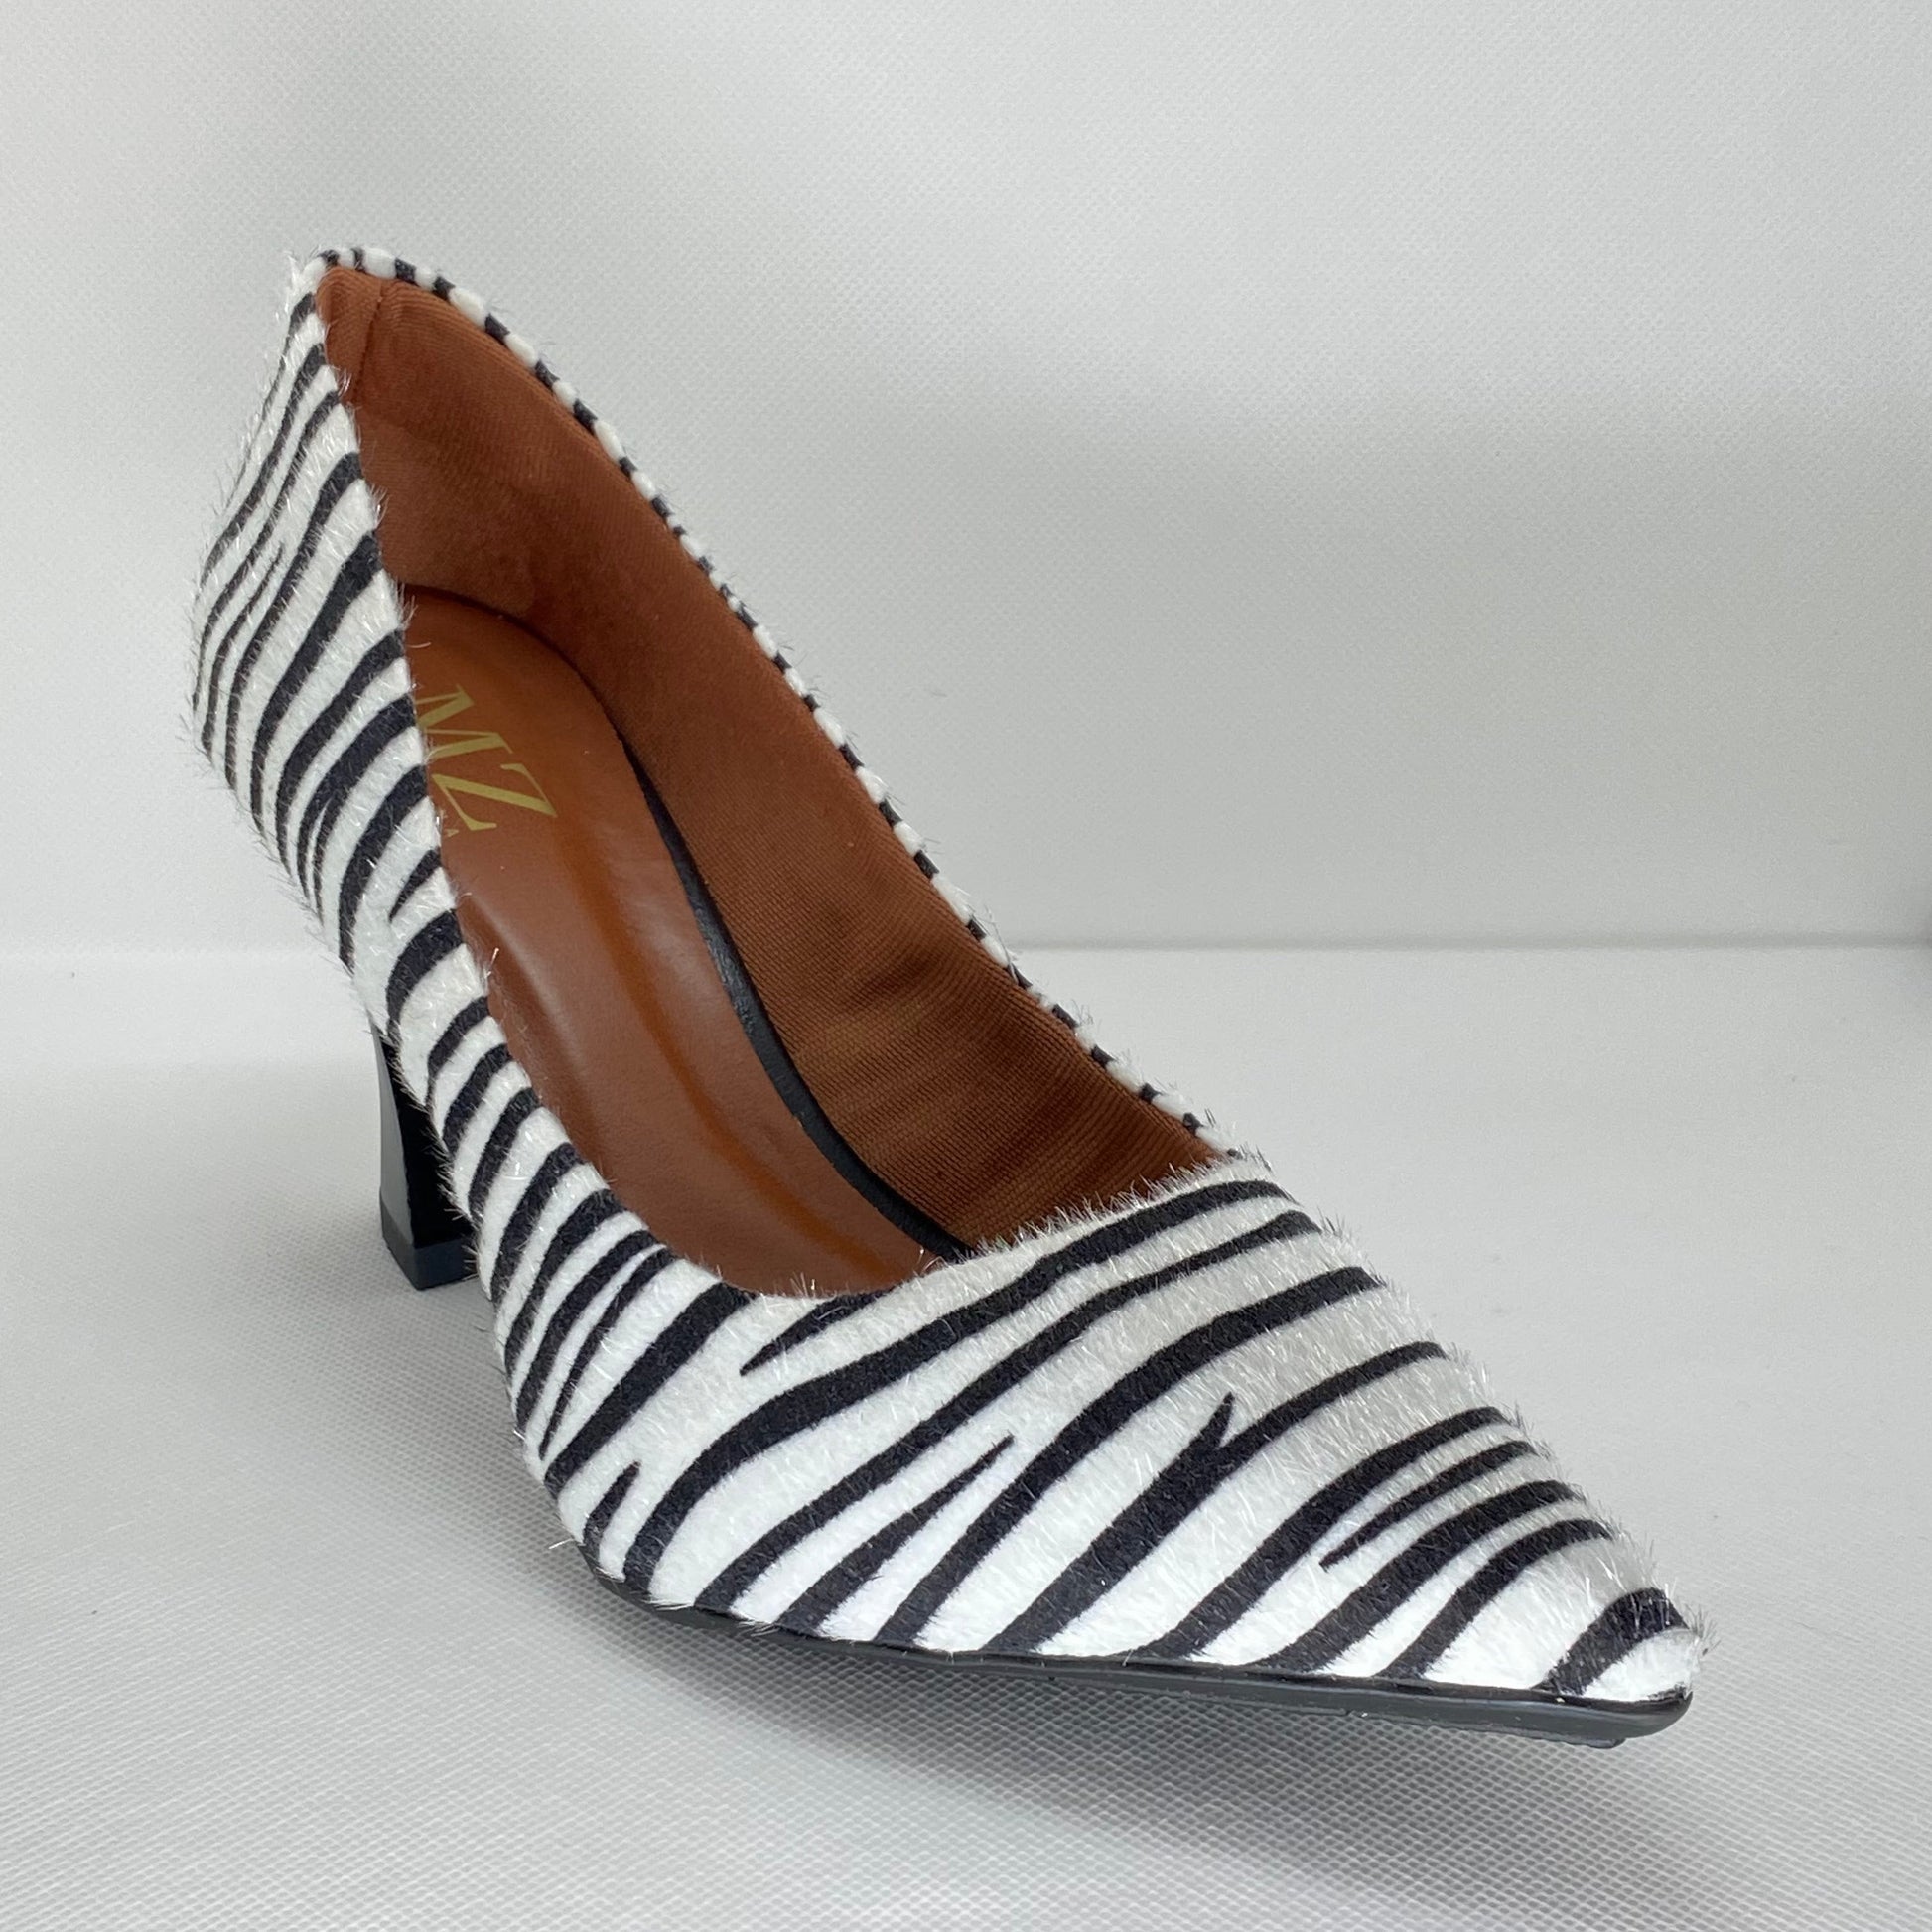 Carai Zebra Textured Animal Print - Shoes from Moda in Pelle UK